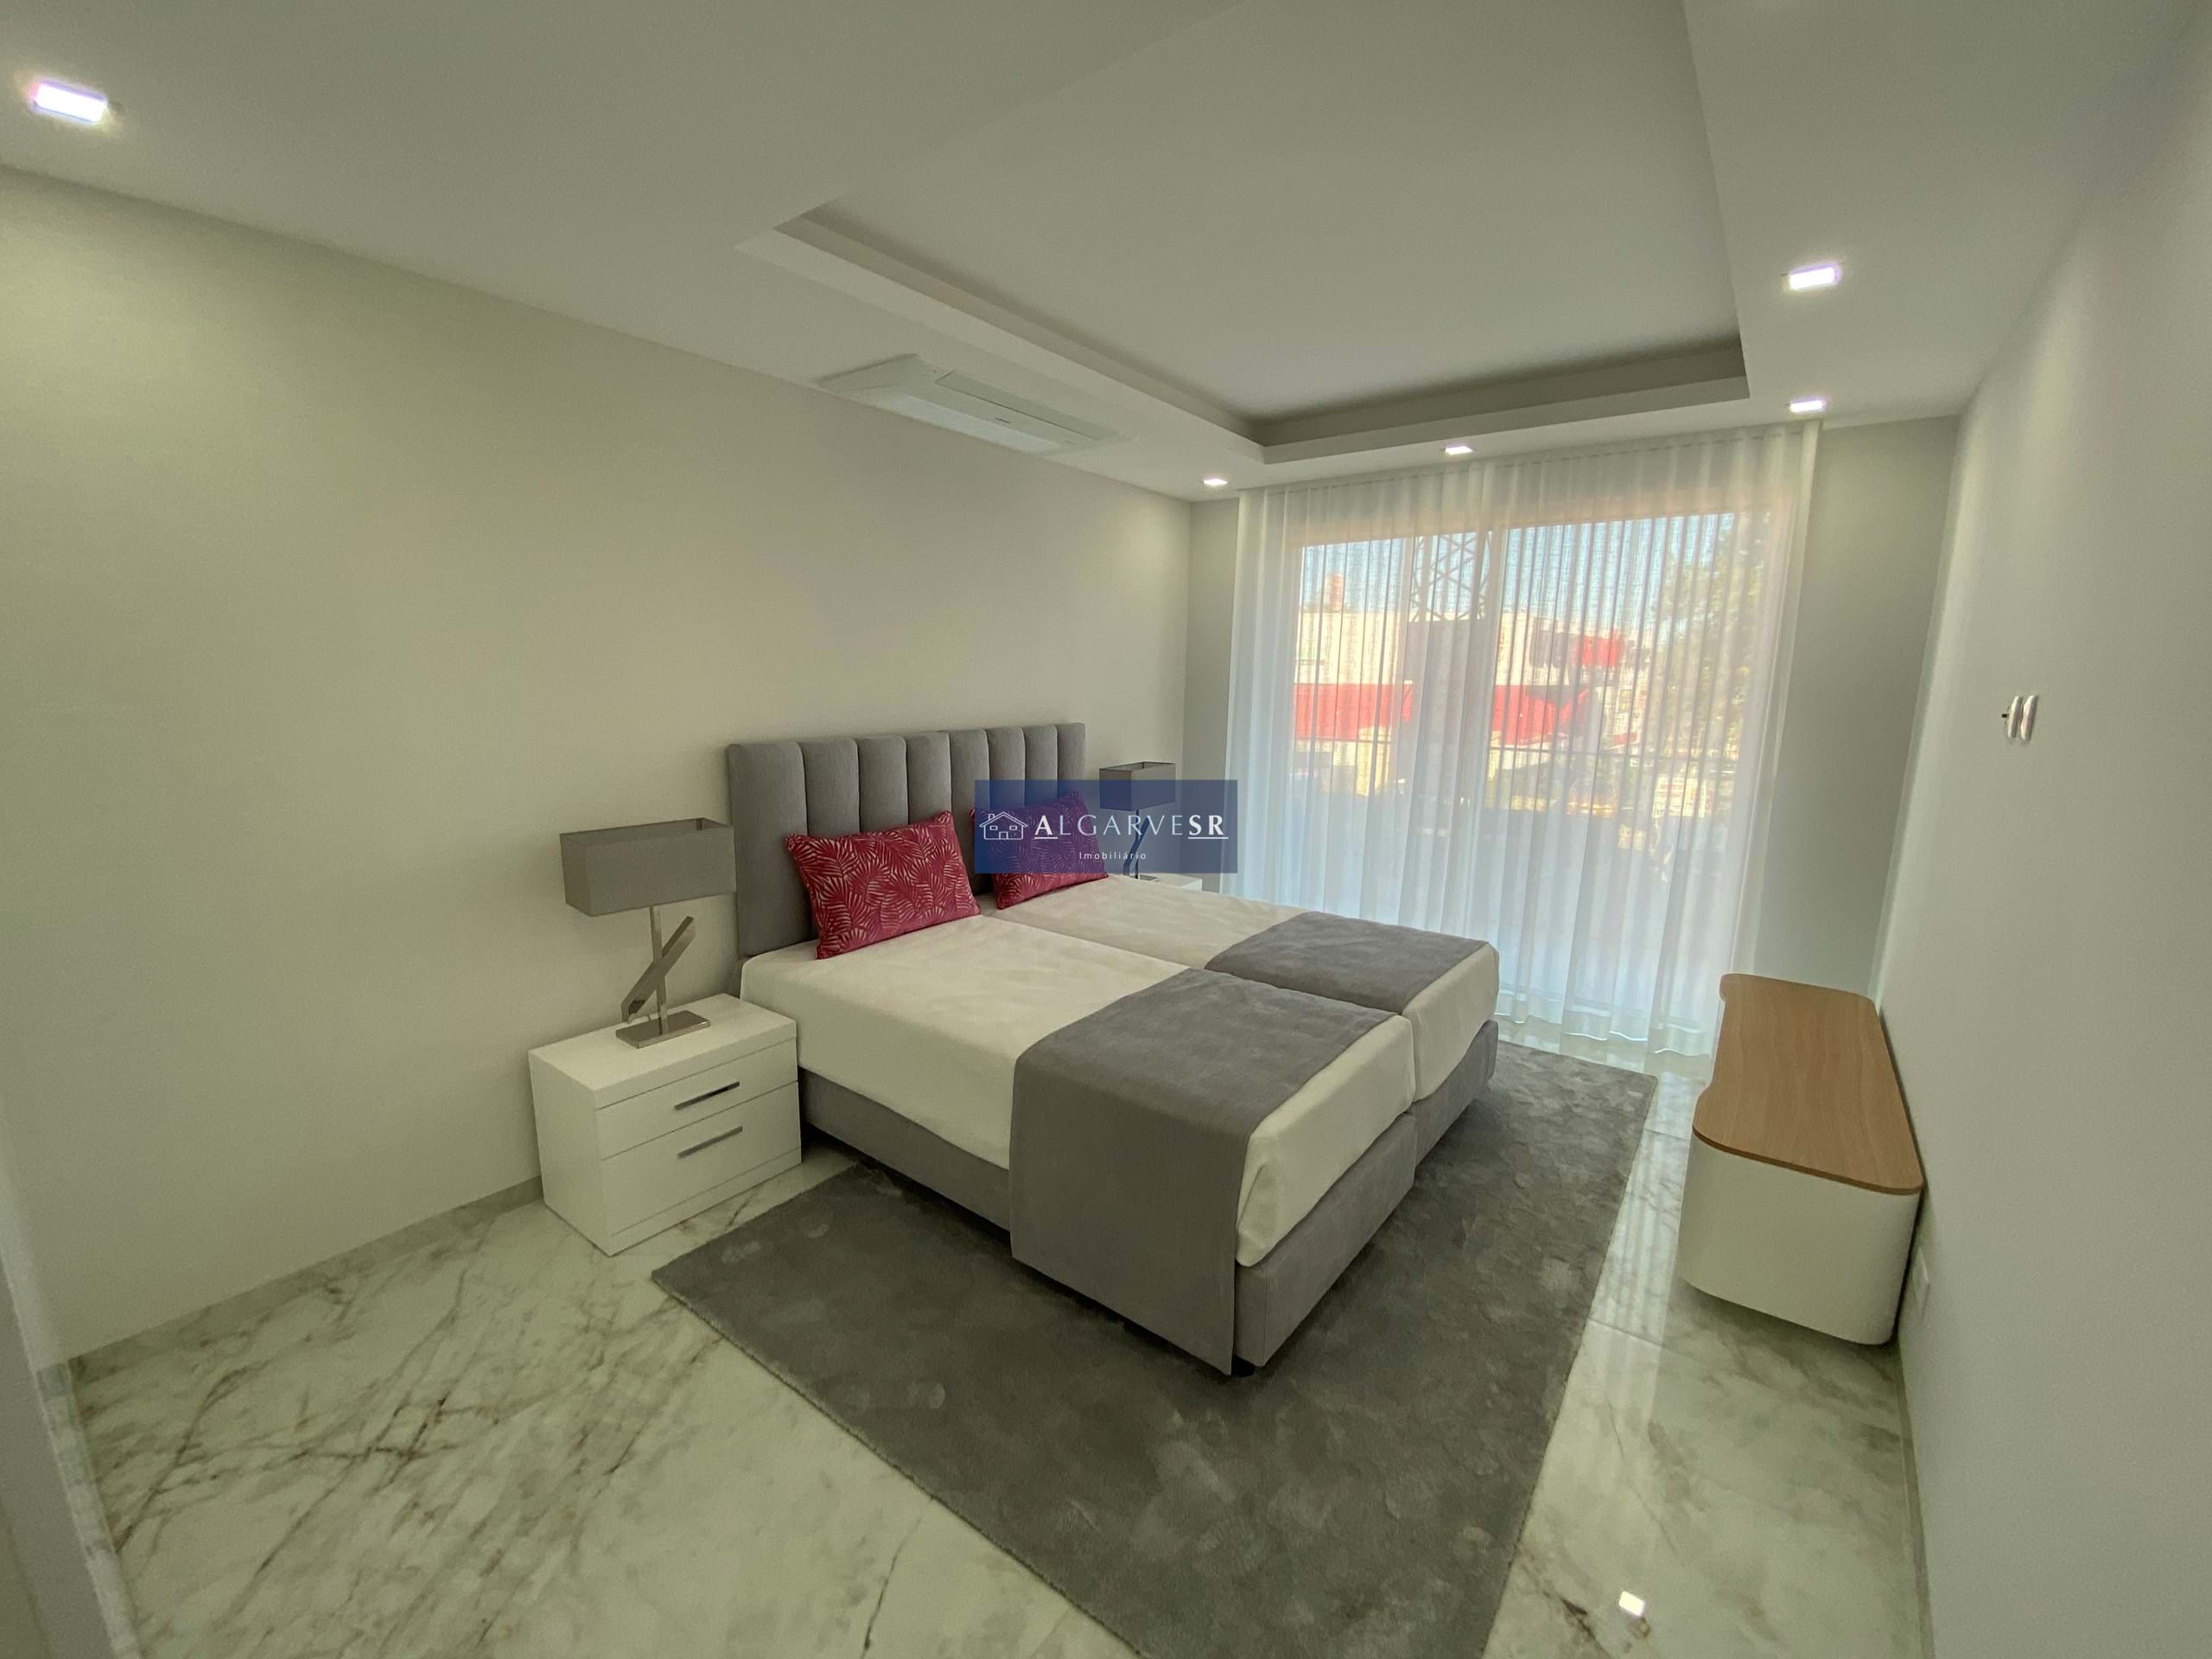 Lagos - Apartamento Novo T2 condominio de luxo c/ piscina